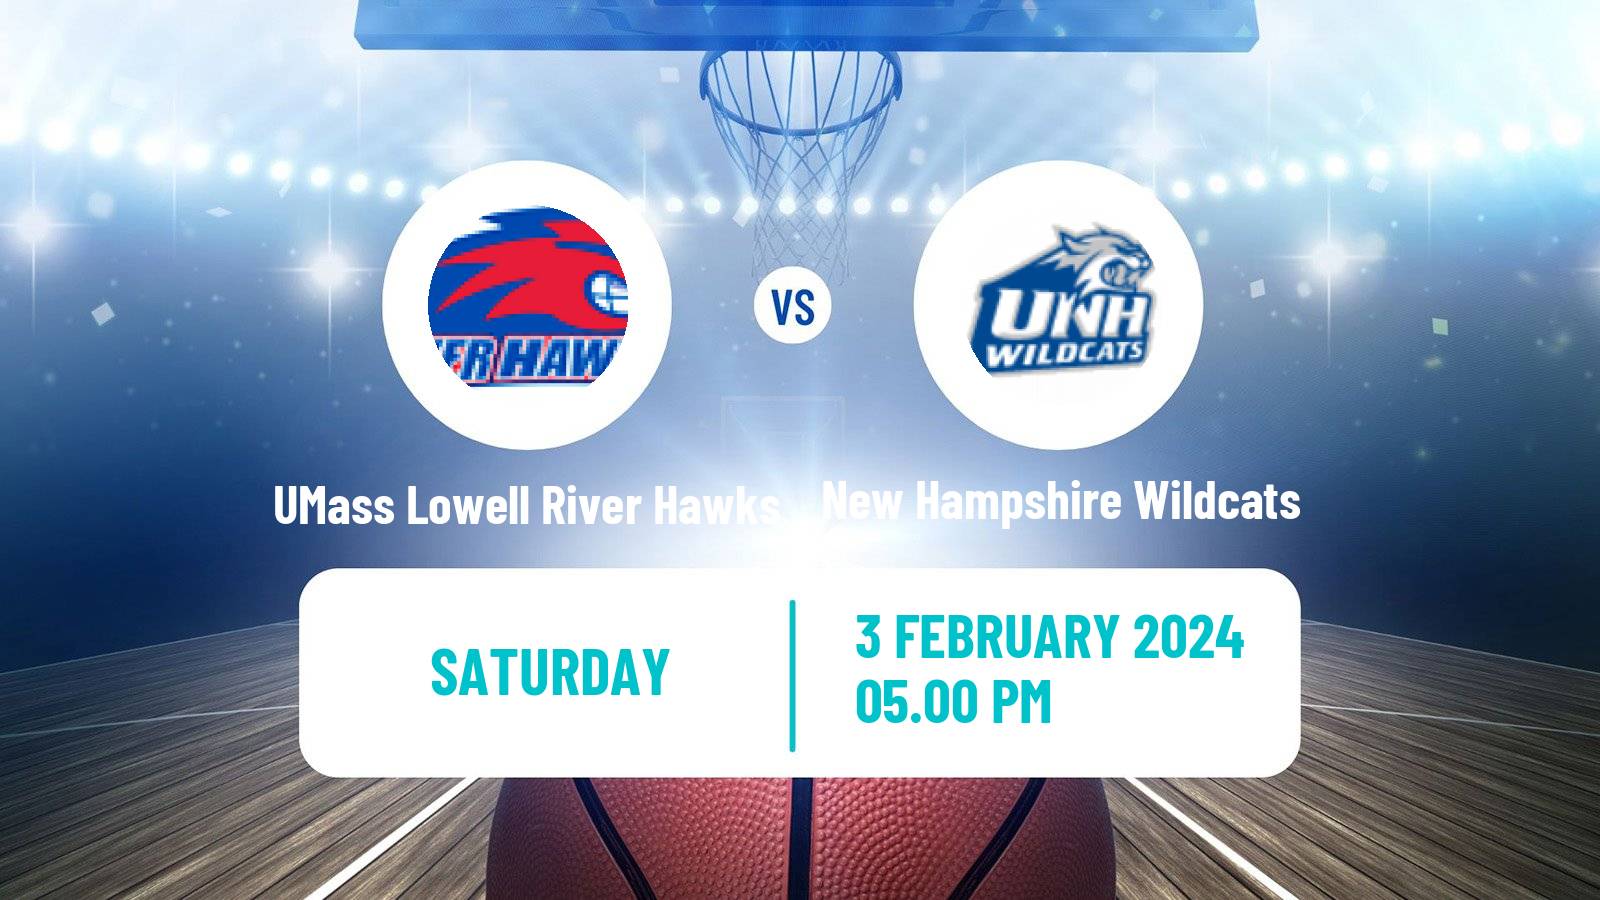 Basketball NCAA College Basketball UMass Lowell River Hawks - New Hampshire Wildcats